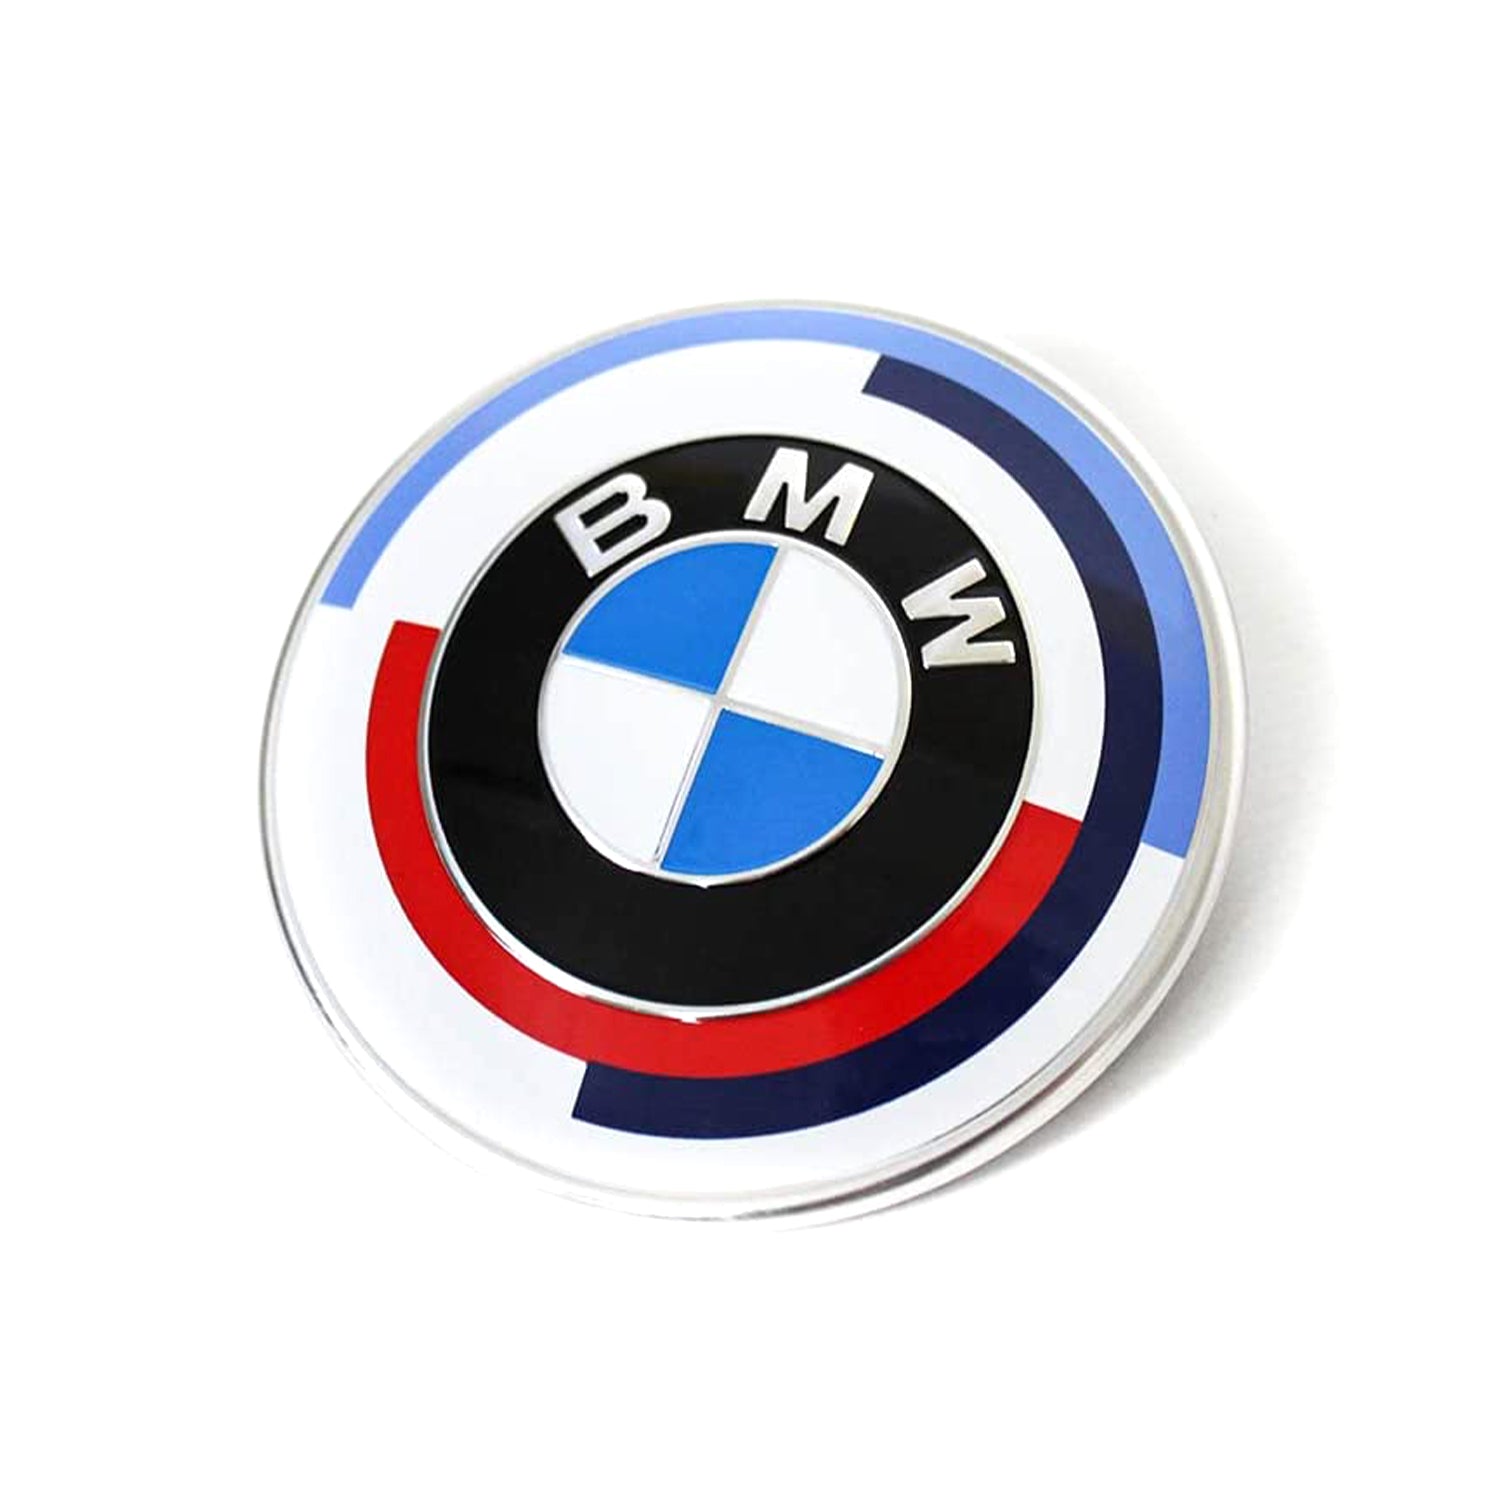 Genuine BMW 2 Series 50th Anniversary Heritage Front Badge Emblem 51148087190 (G42) - R44 Performance